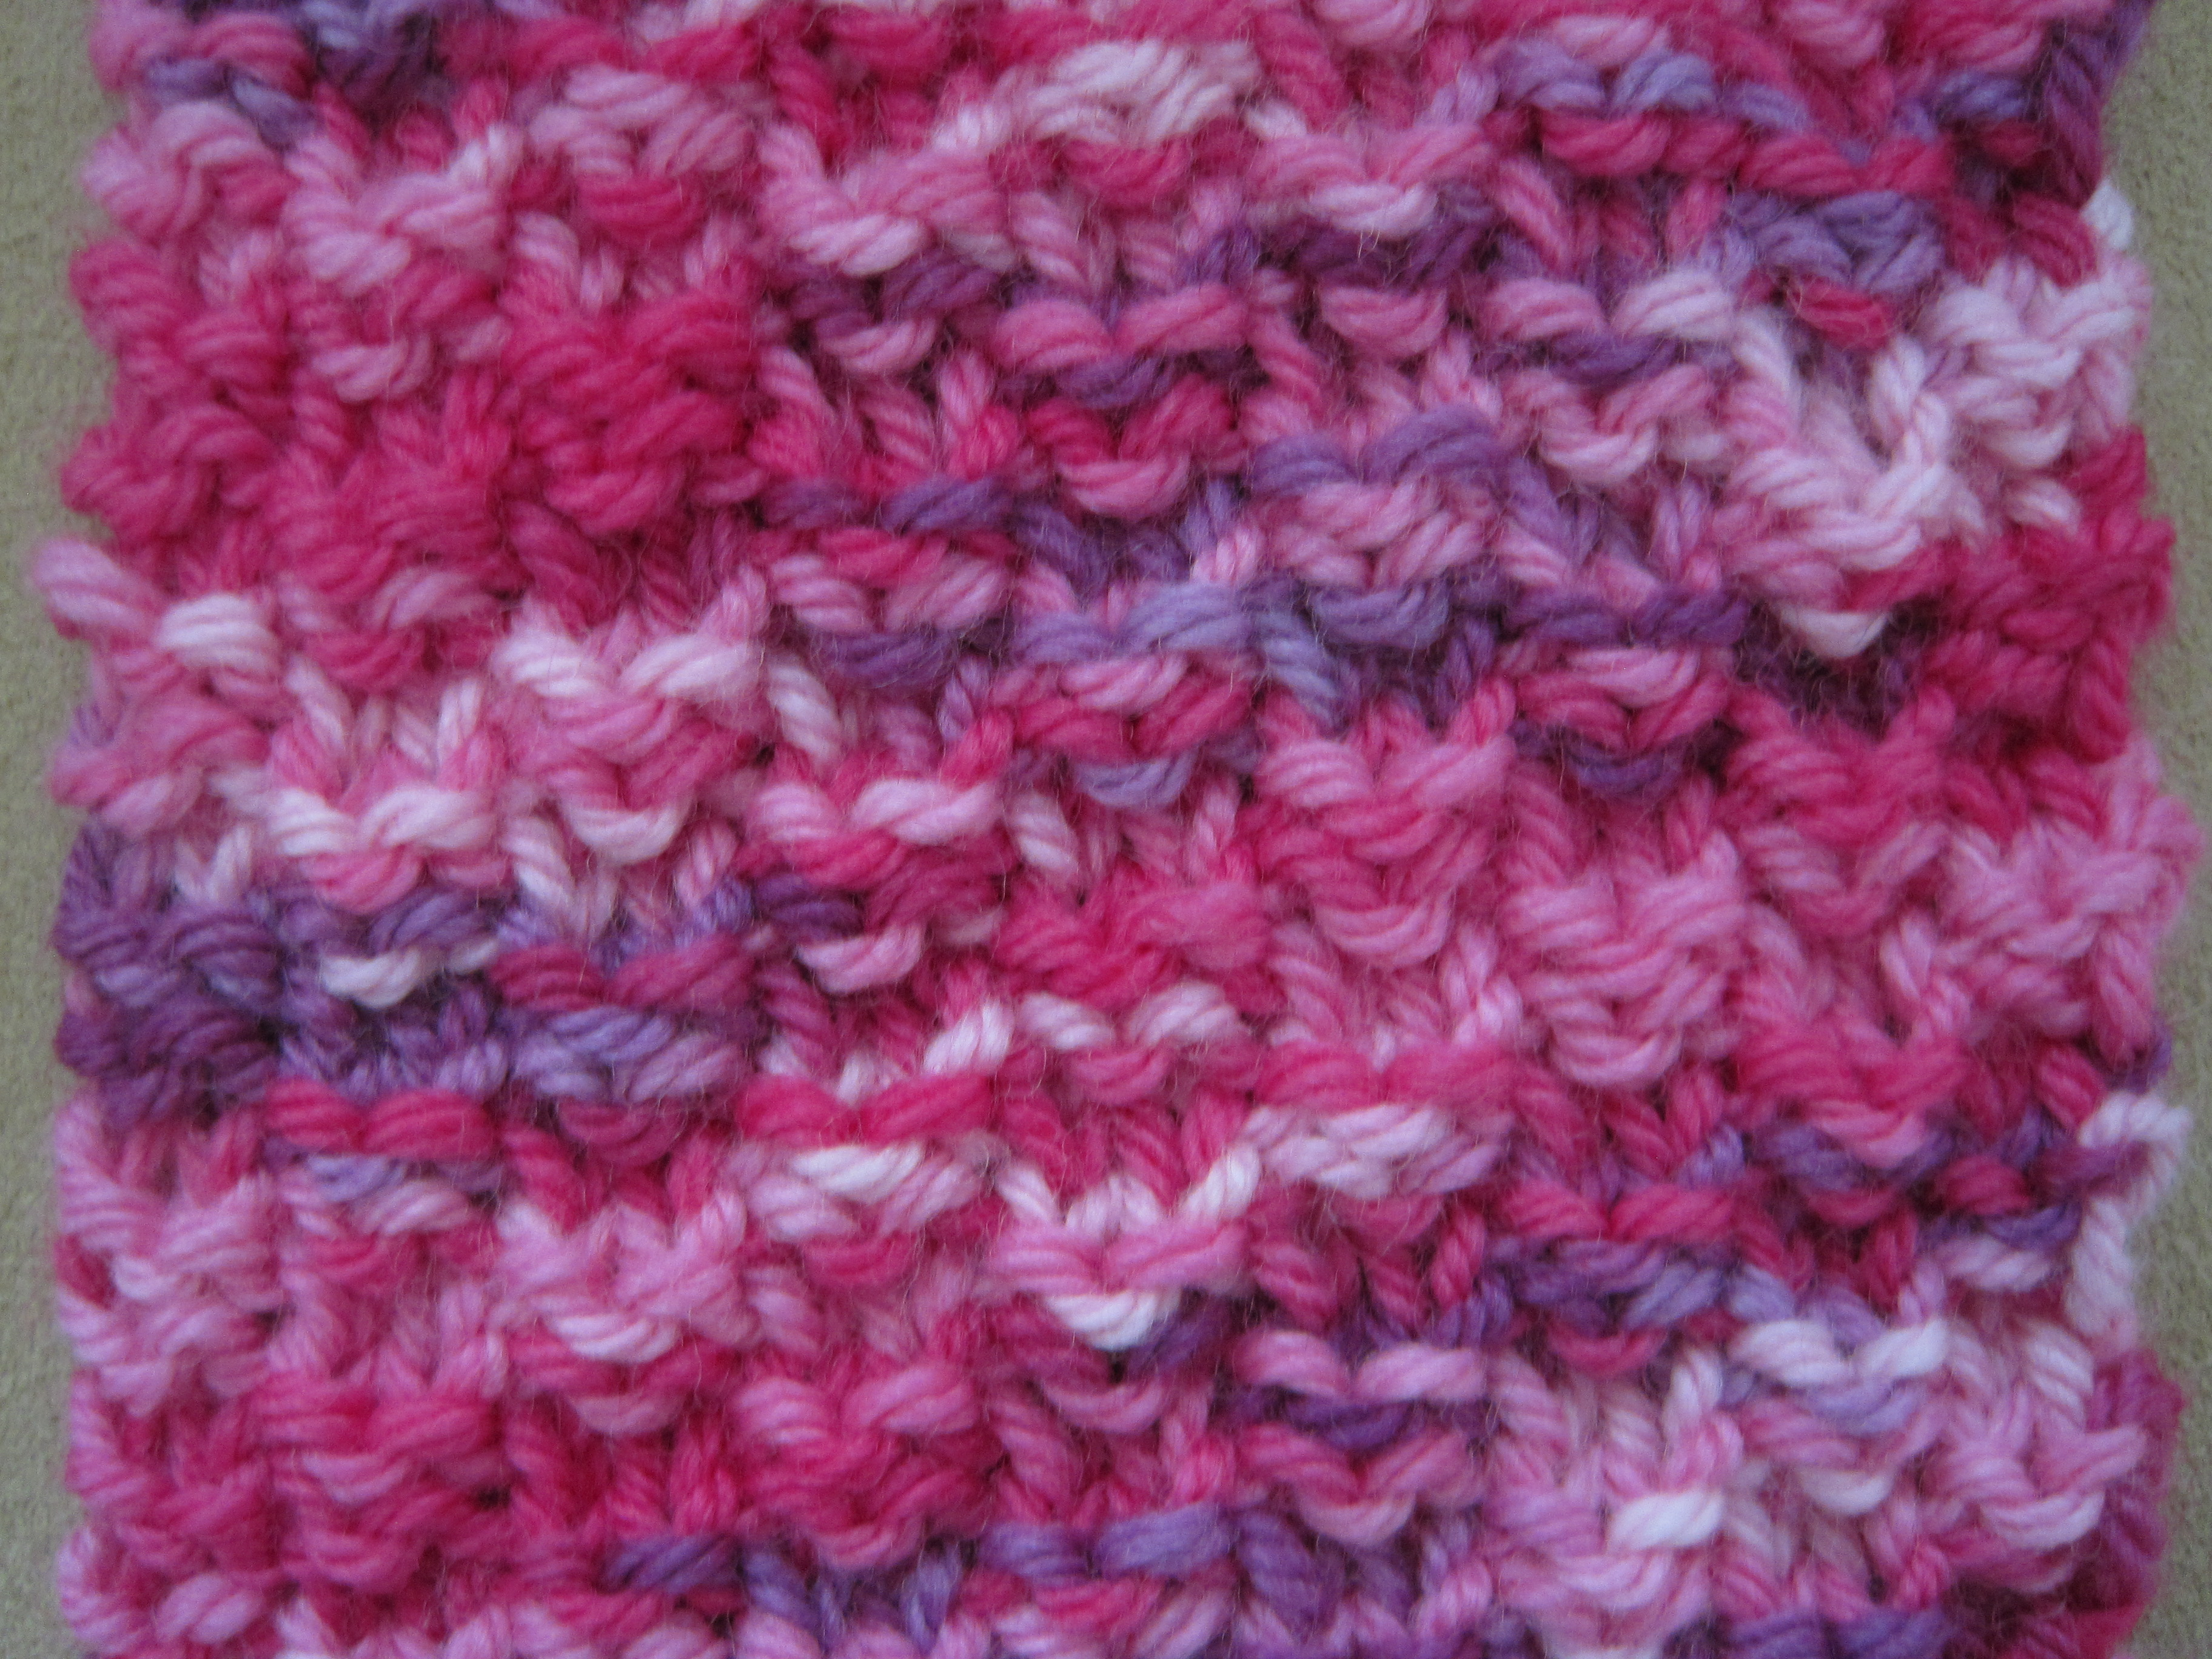 Variegated Yarn Patterns Knitting Knitting With Variegated Yarn Makerknit